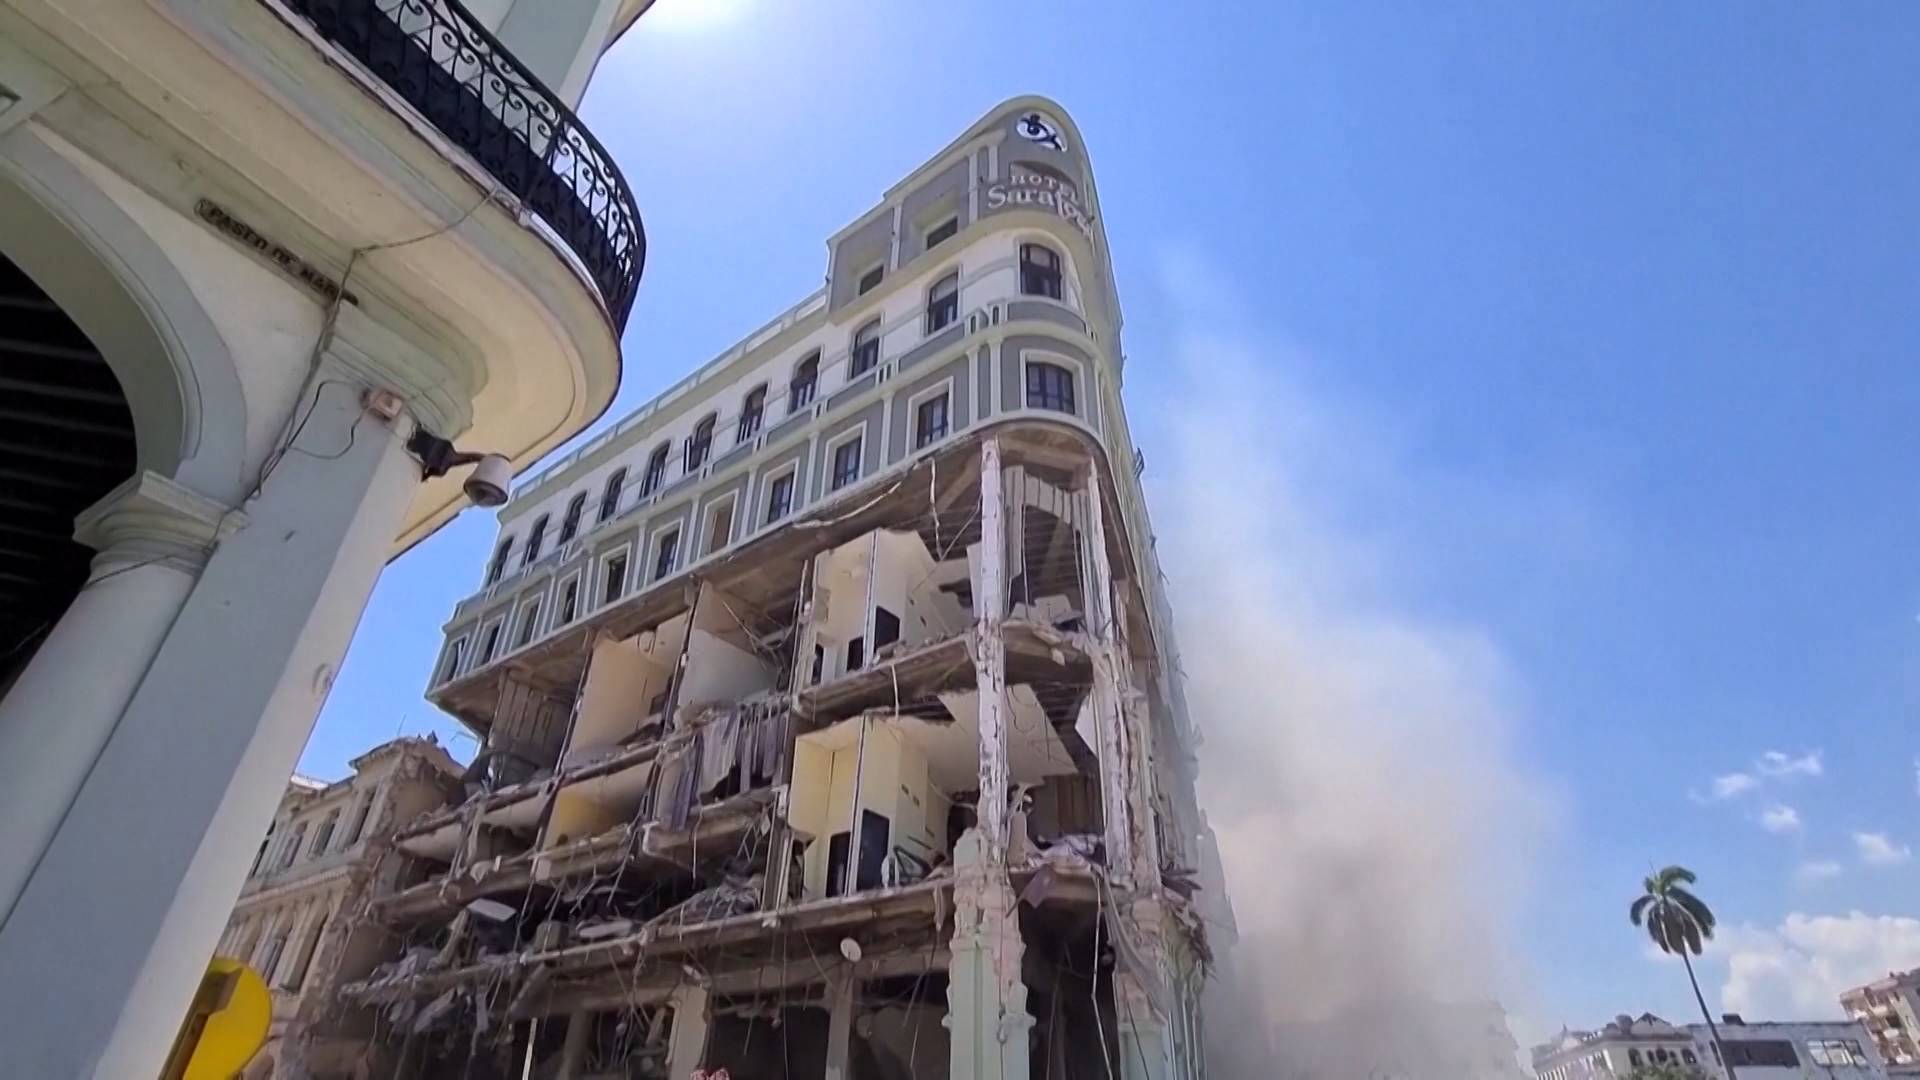 31 Killed as Explosion Tears Through Luxury Havana Hotel